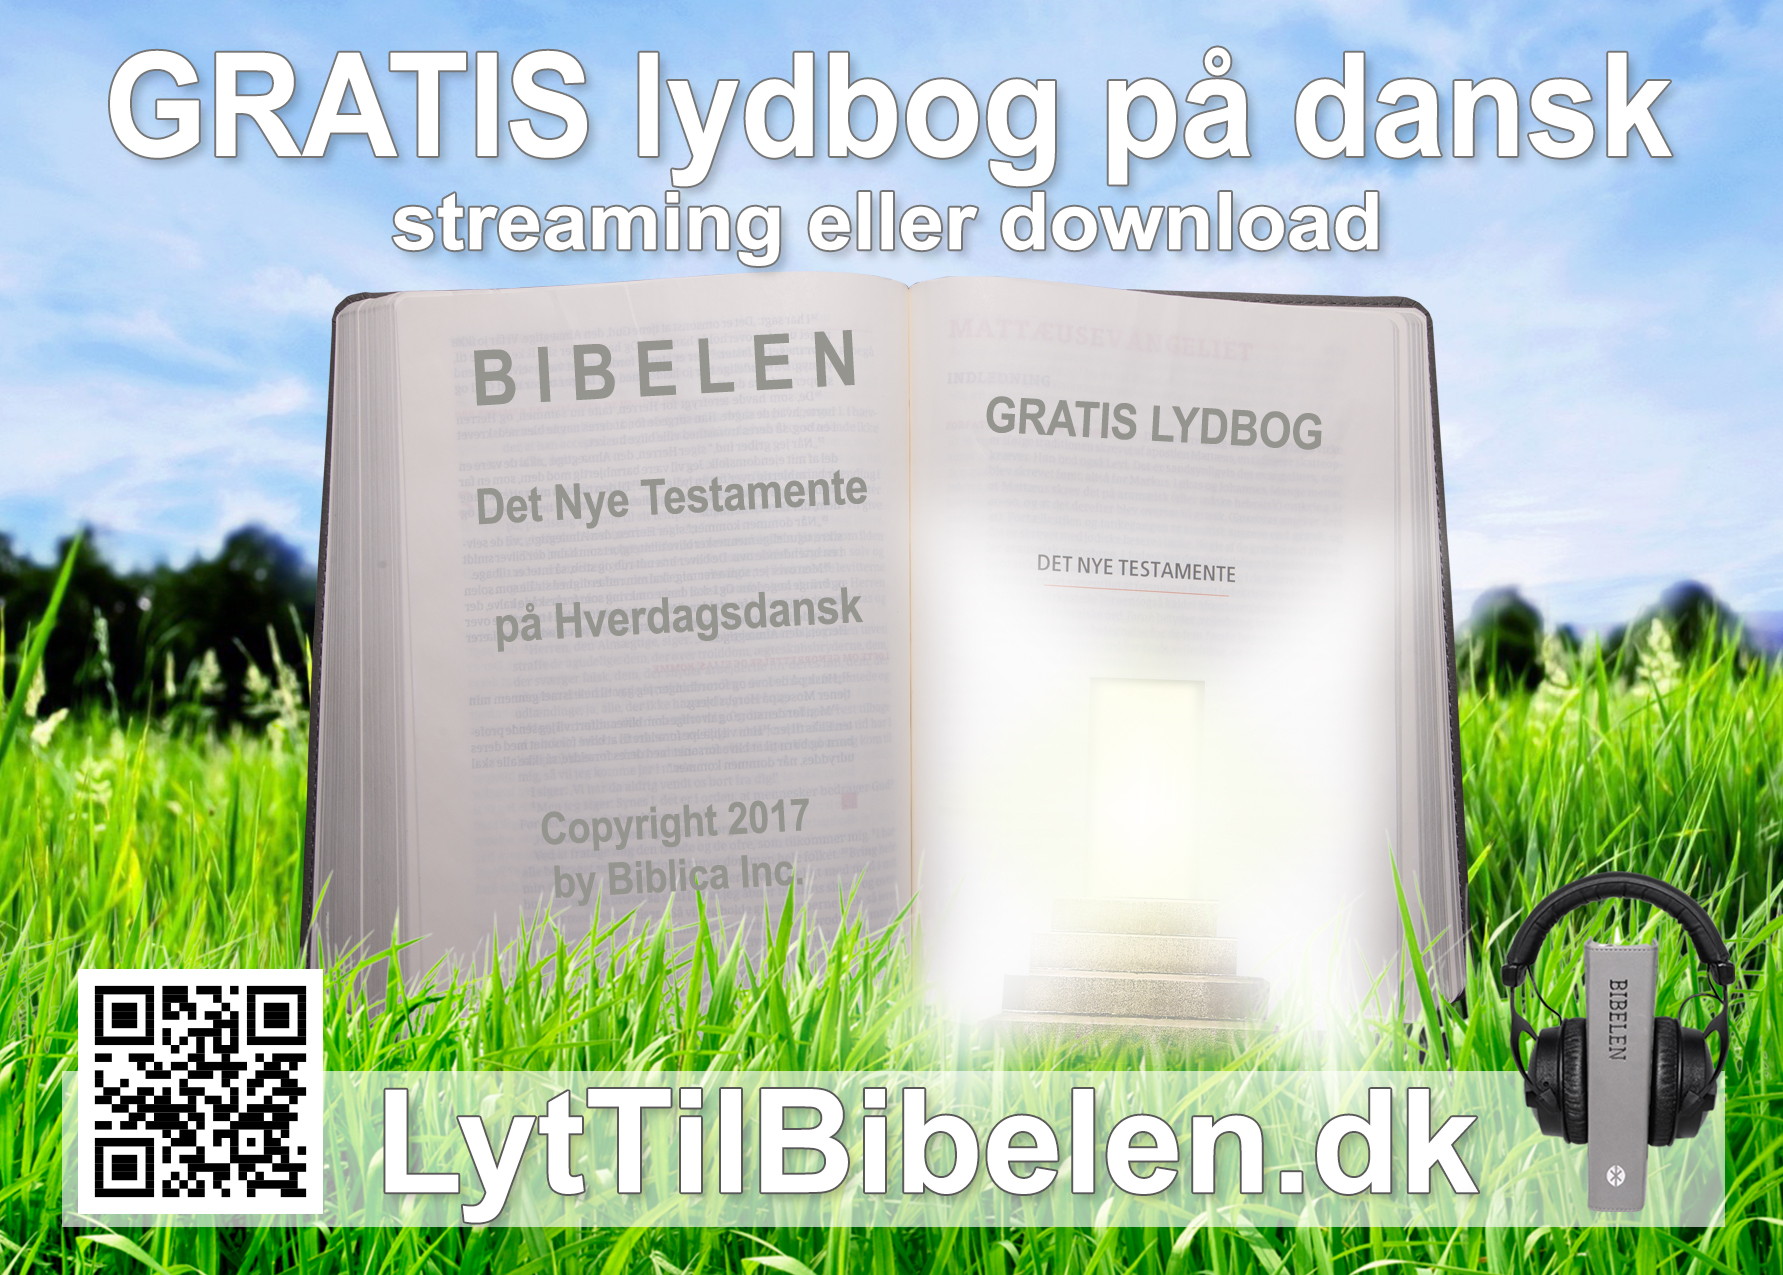 Download Bibelen som GRATIS lydbog!